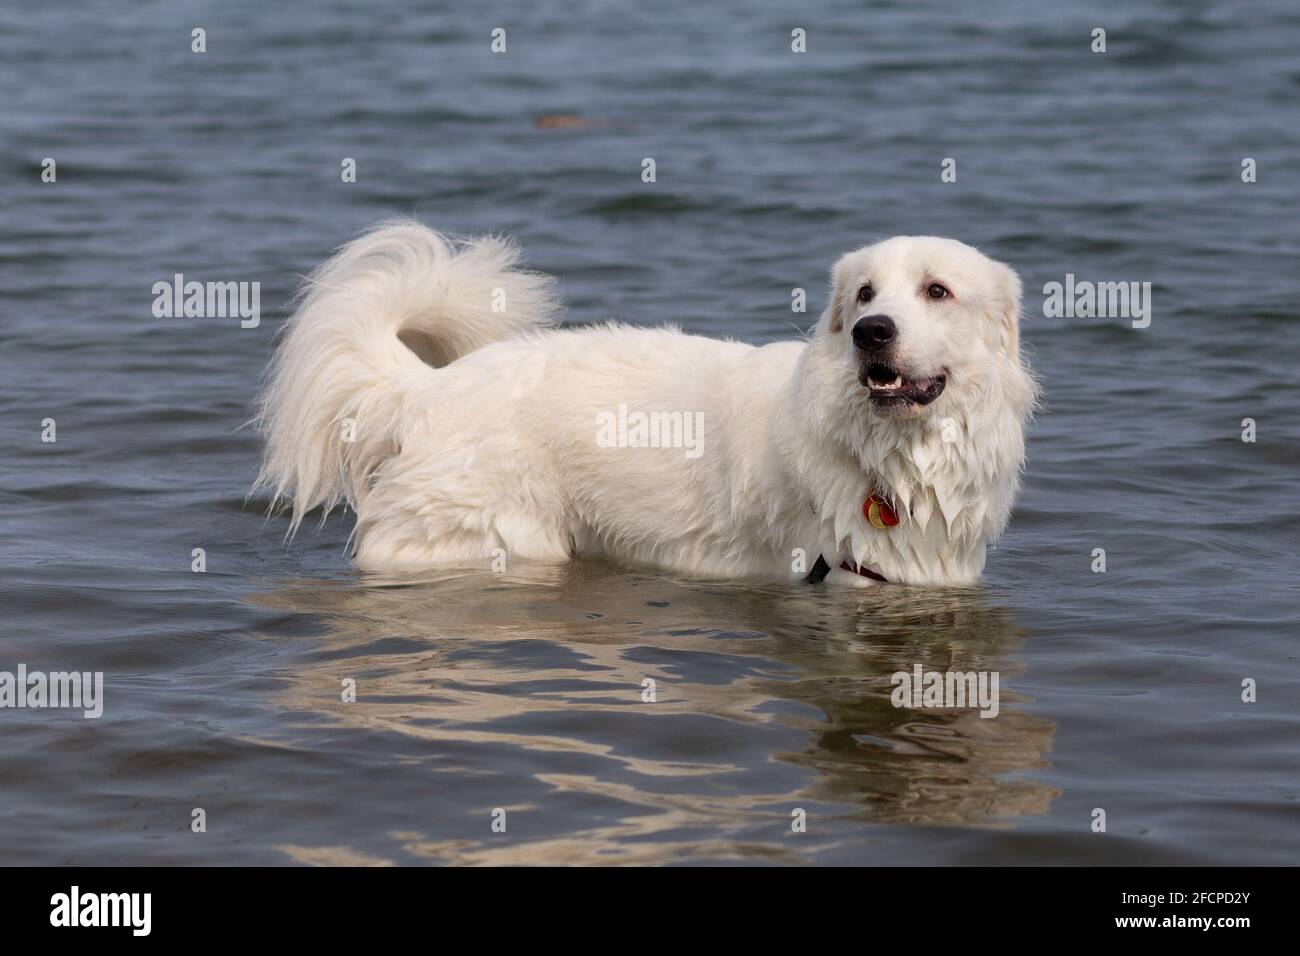 Cane bianco in acqua, sorridente. Foto Stock